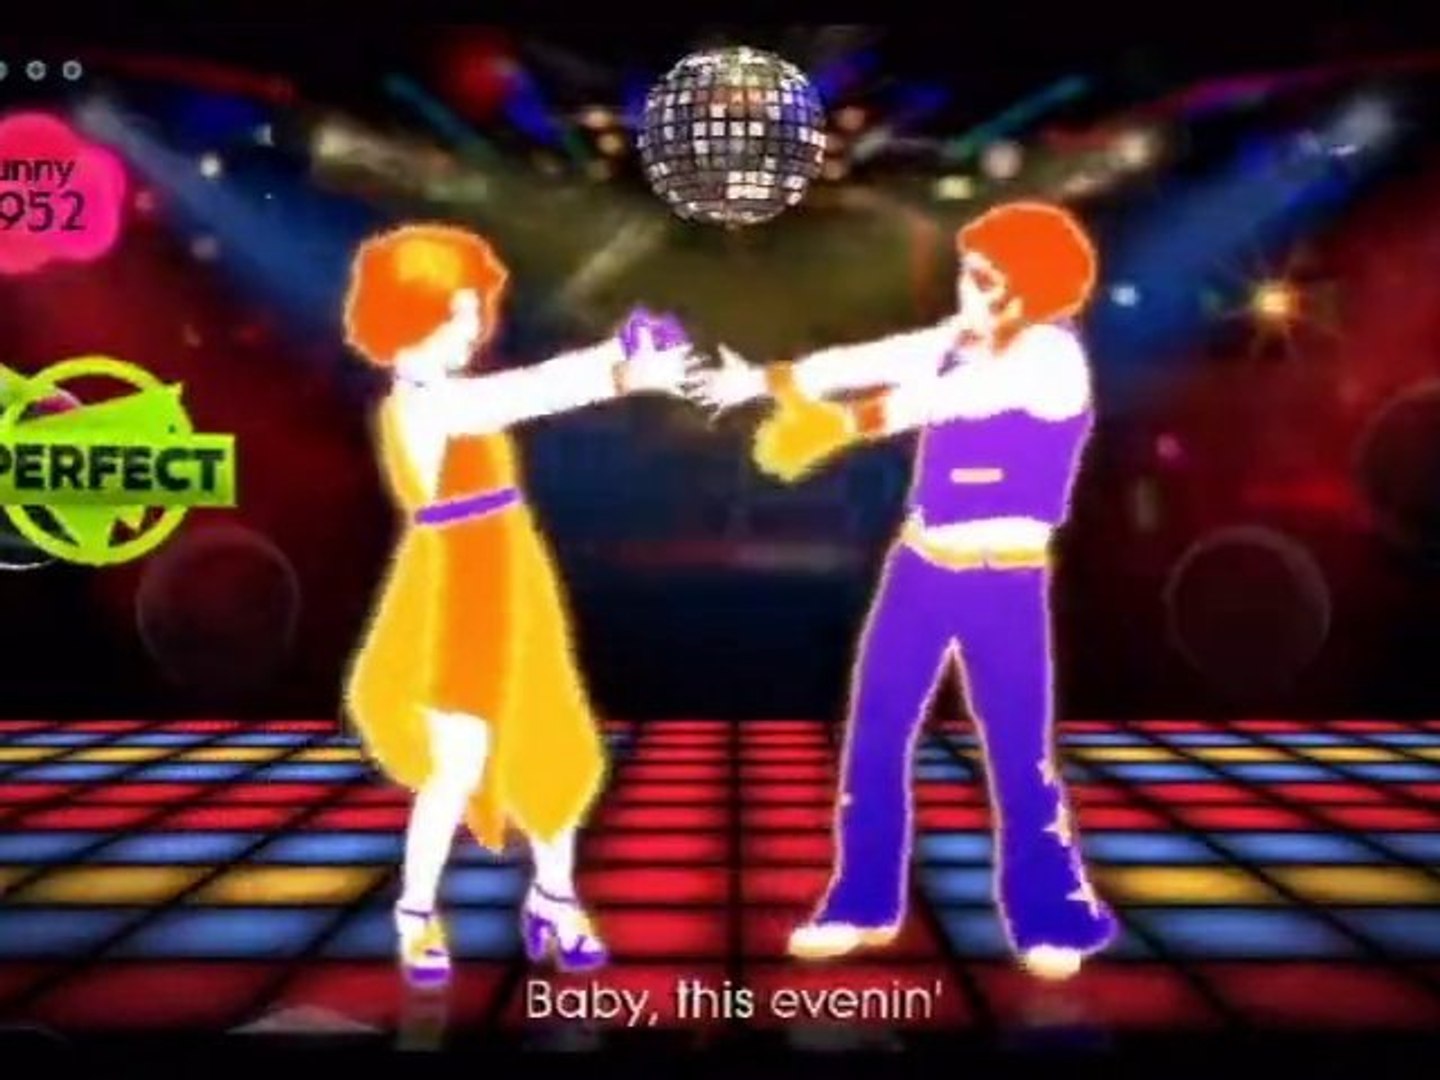 Just Dance 2 - Hot Stuff "Danna Summer" Gameplay - Wii - Video Dailymotion